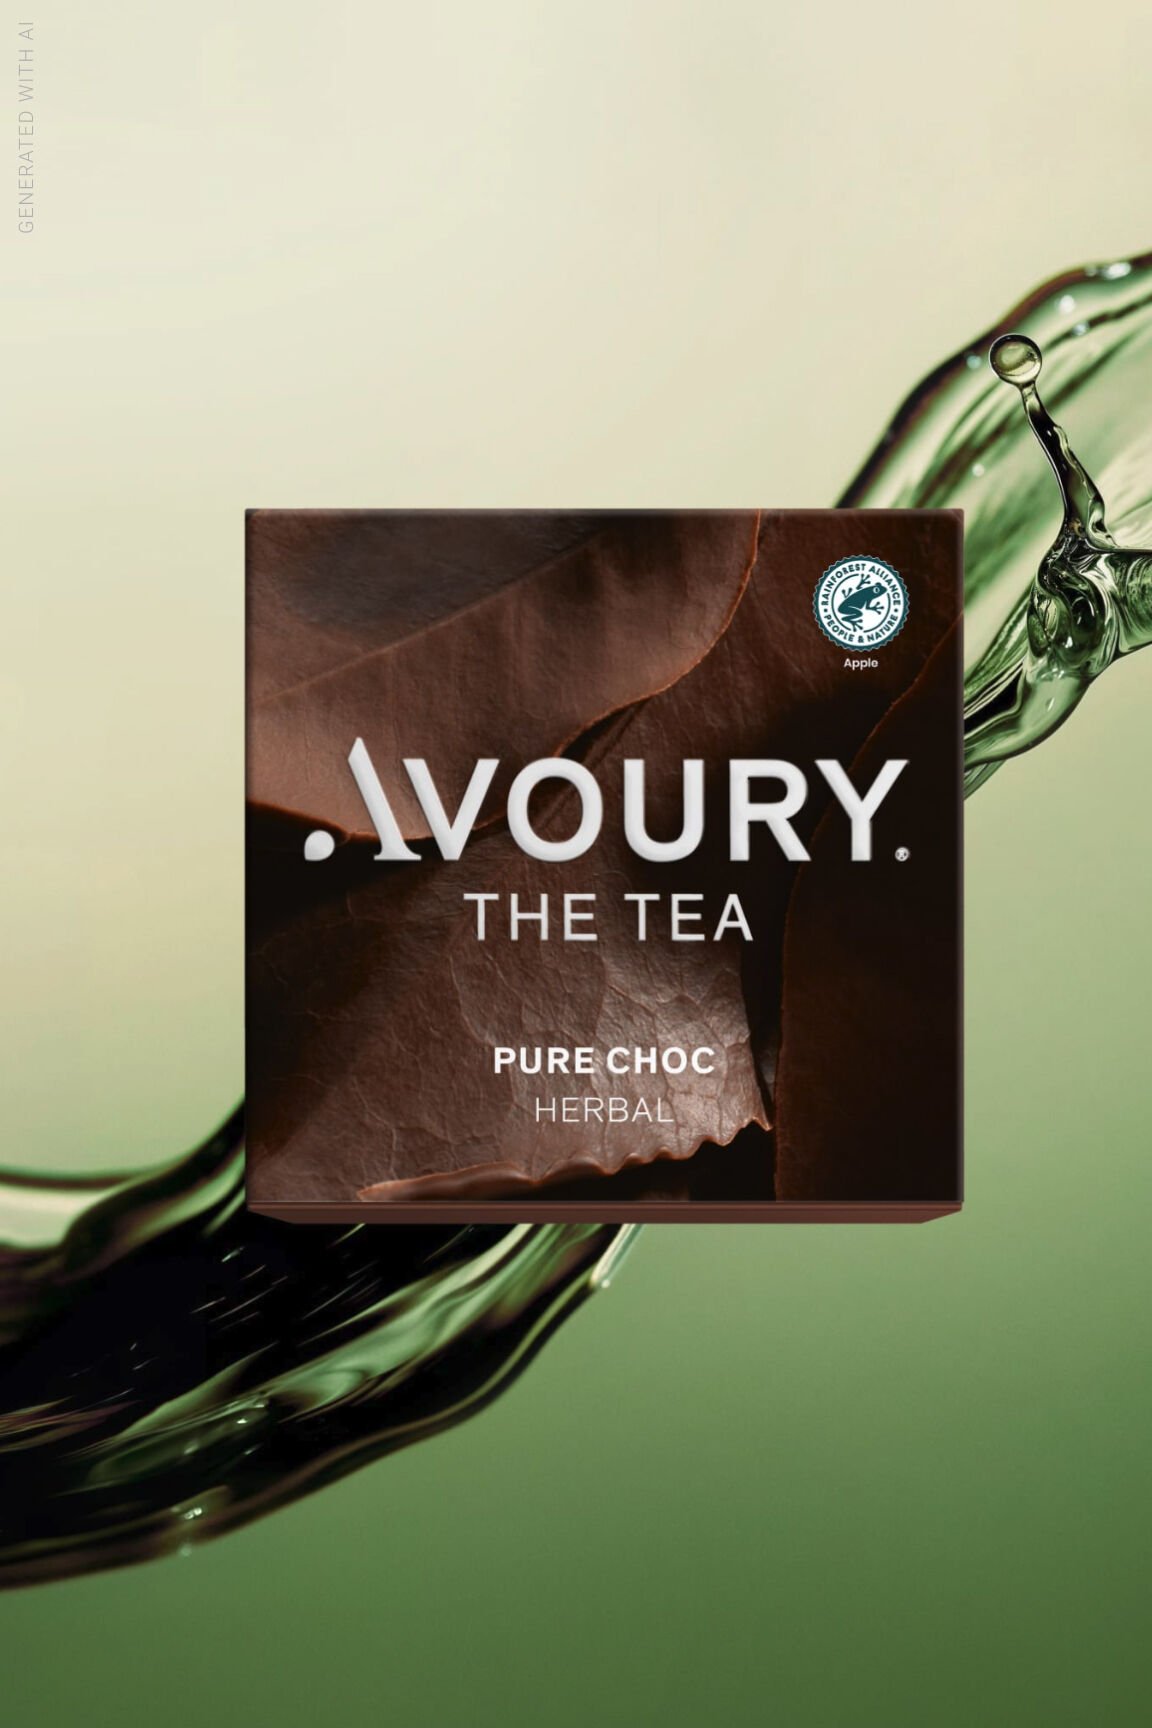 Tea packaging of Pure Choc